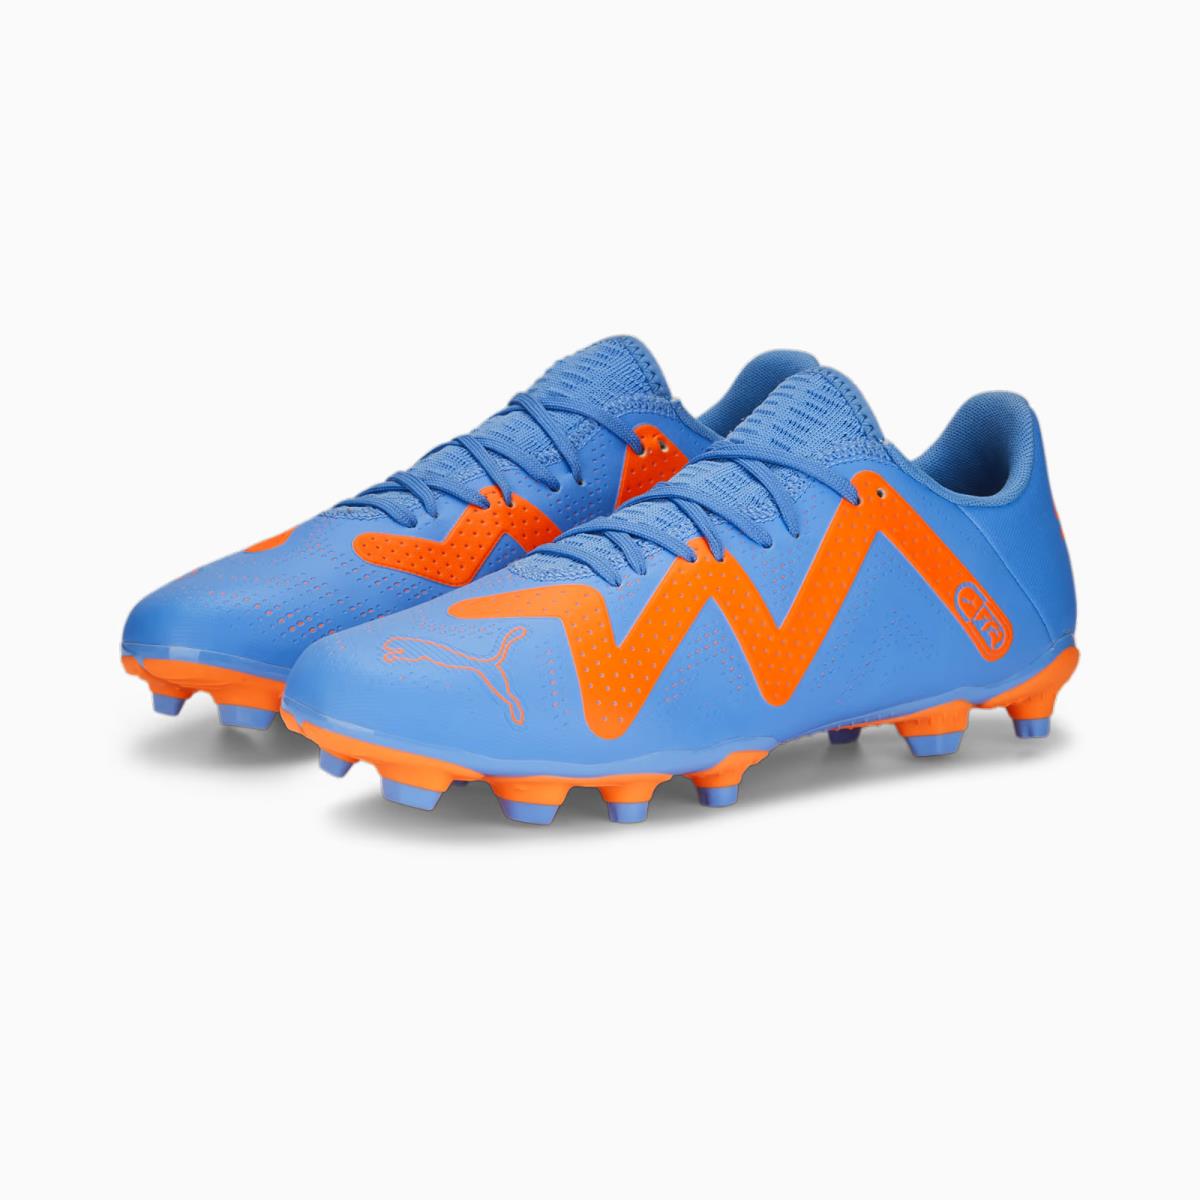 Puma Future Play FG AG Blue Orange Soccer Shoes Cleats 107187 01